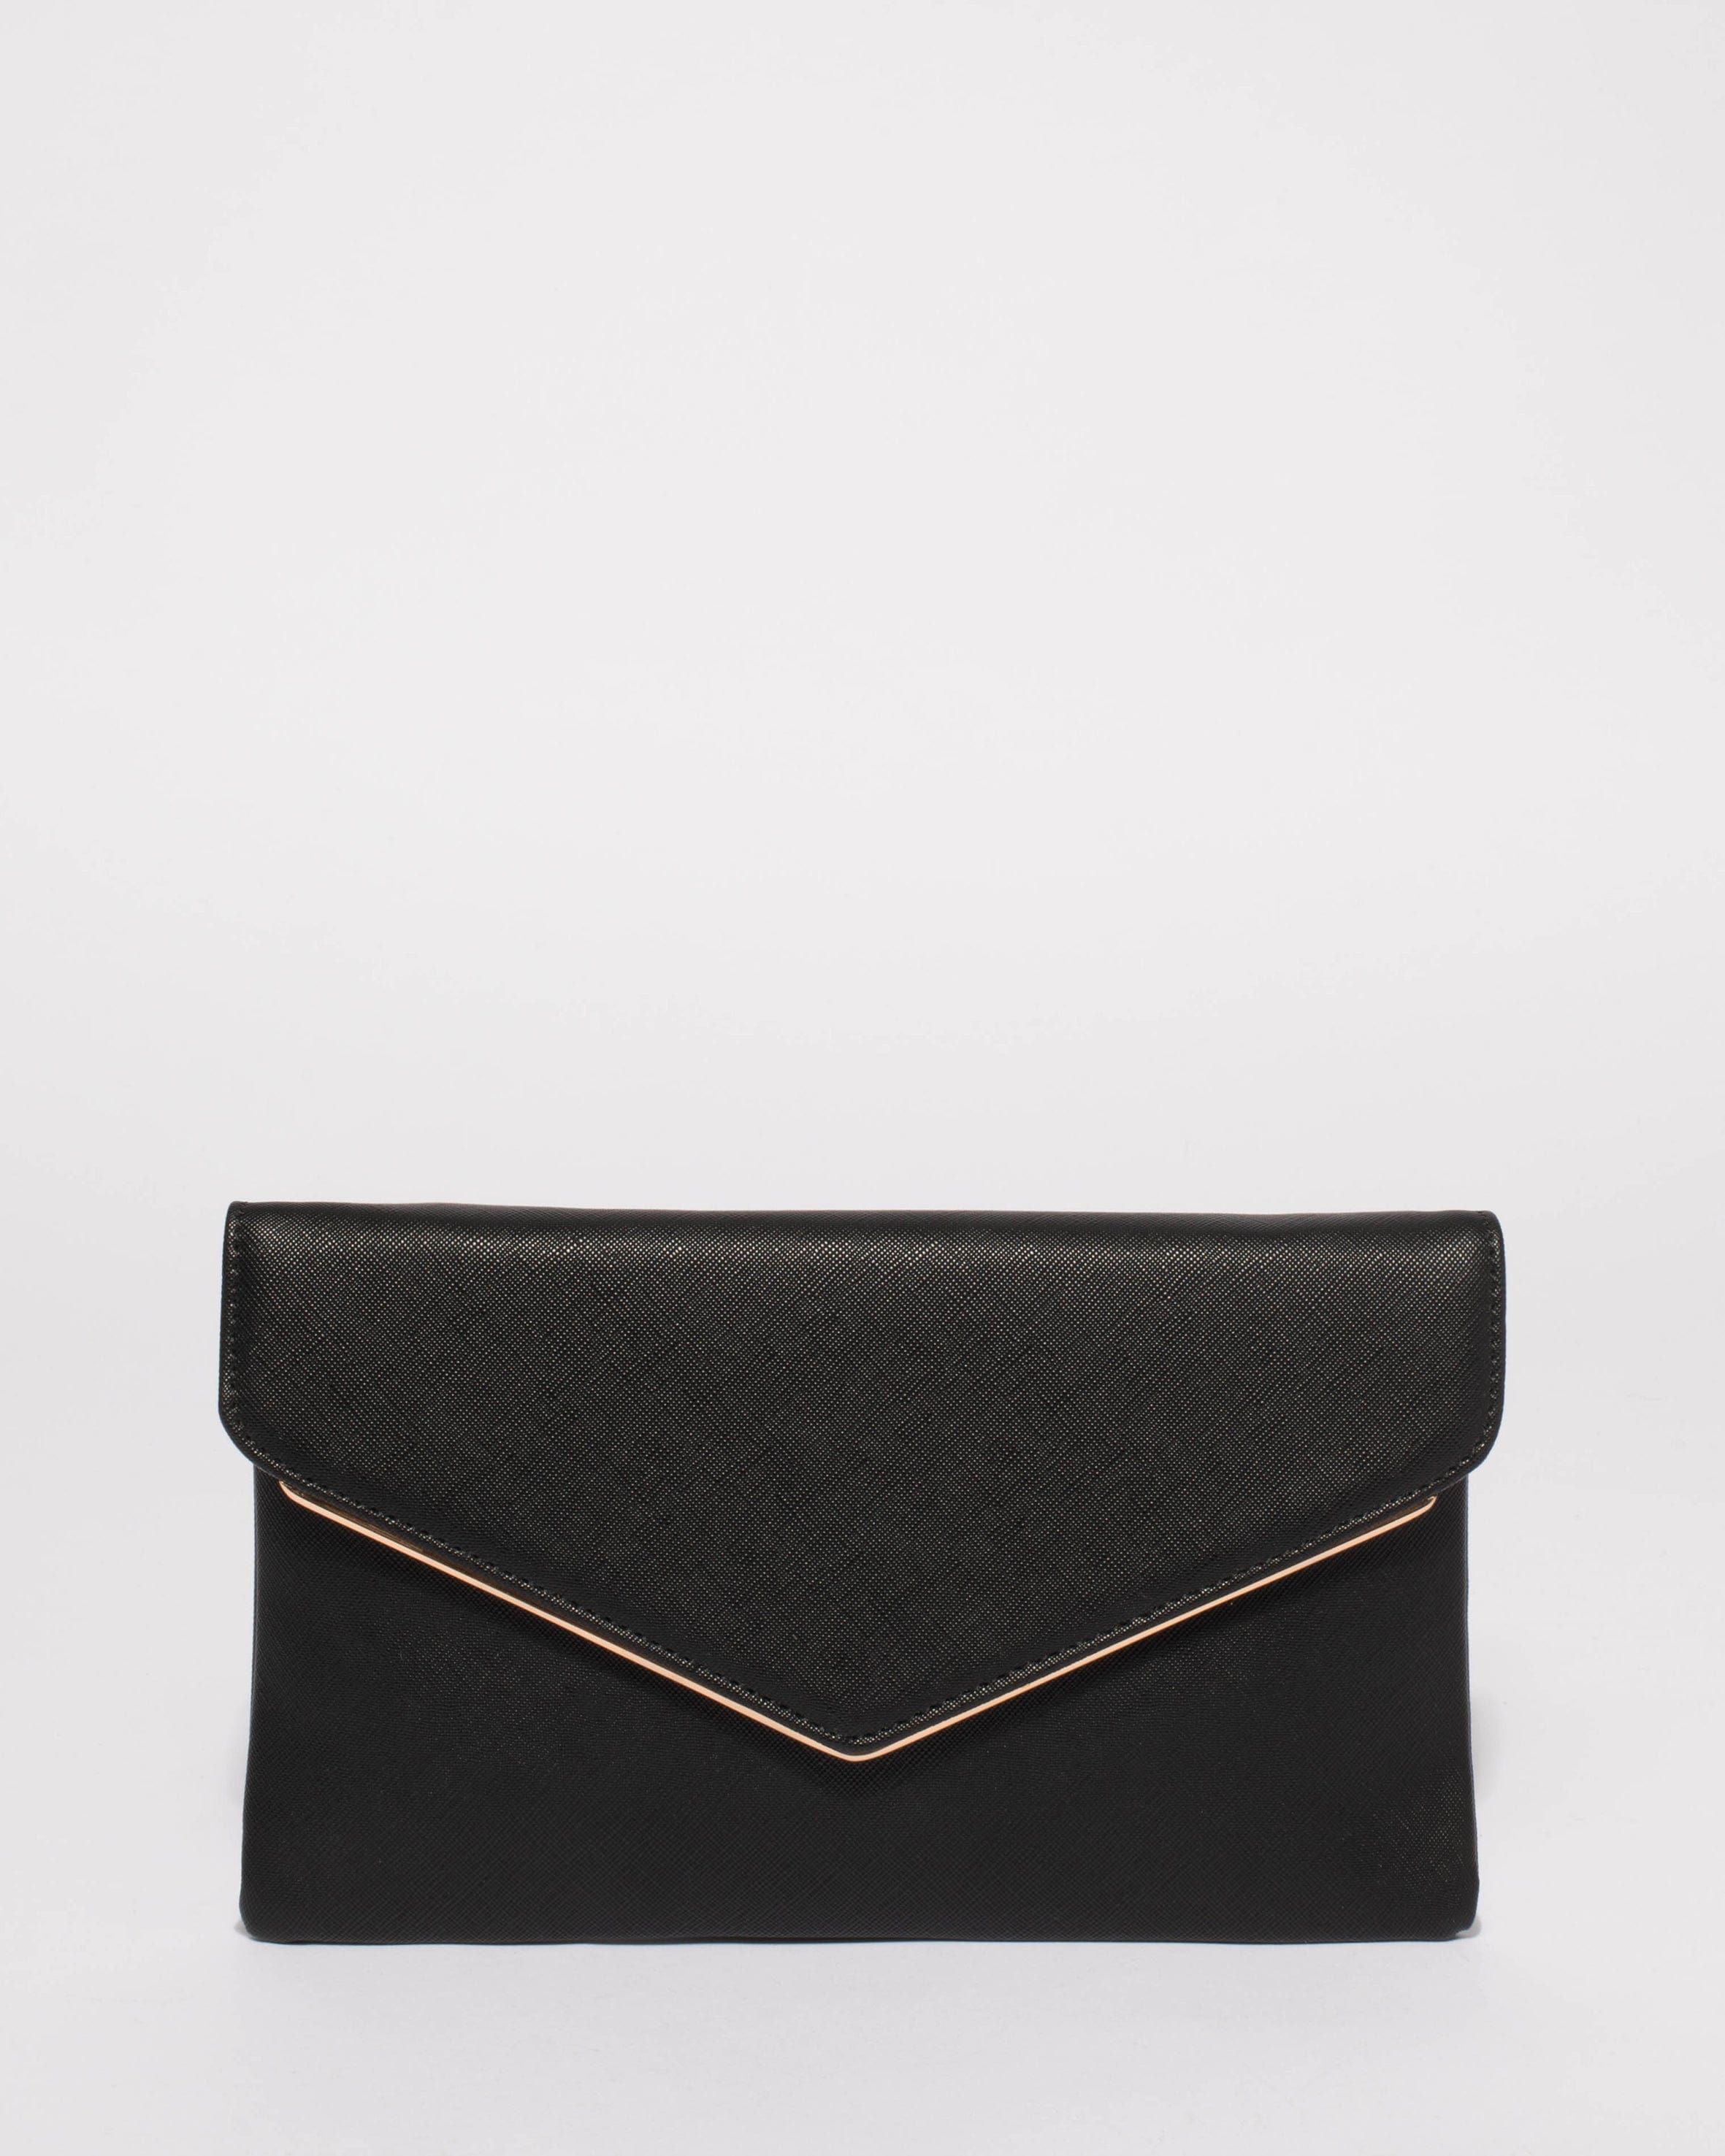 black samantha thin clutch bag with gold hardware 3725930528839